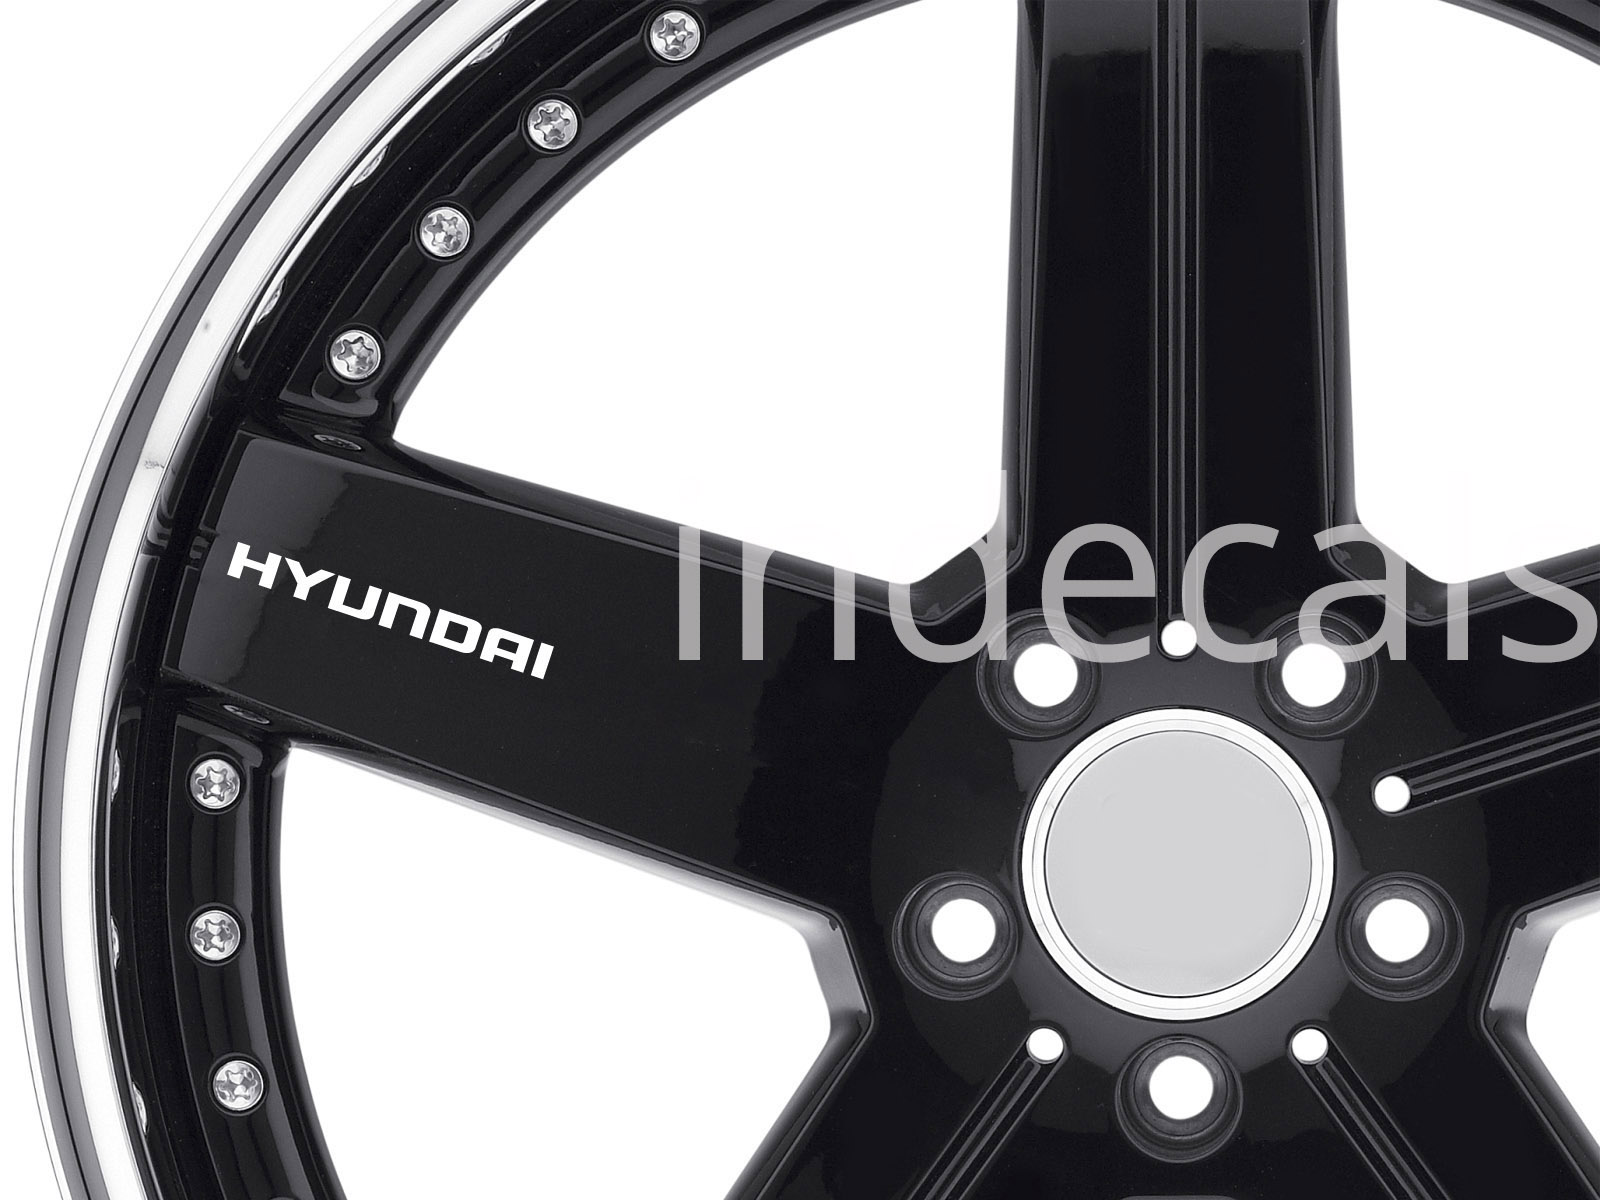 6 x Hyundai Stickers for Wheels - White